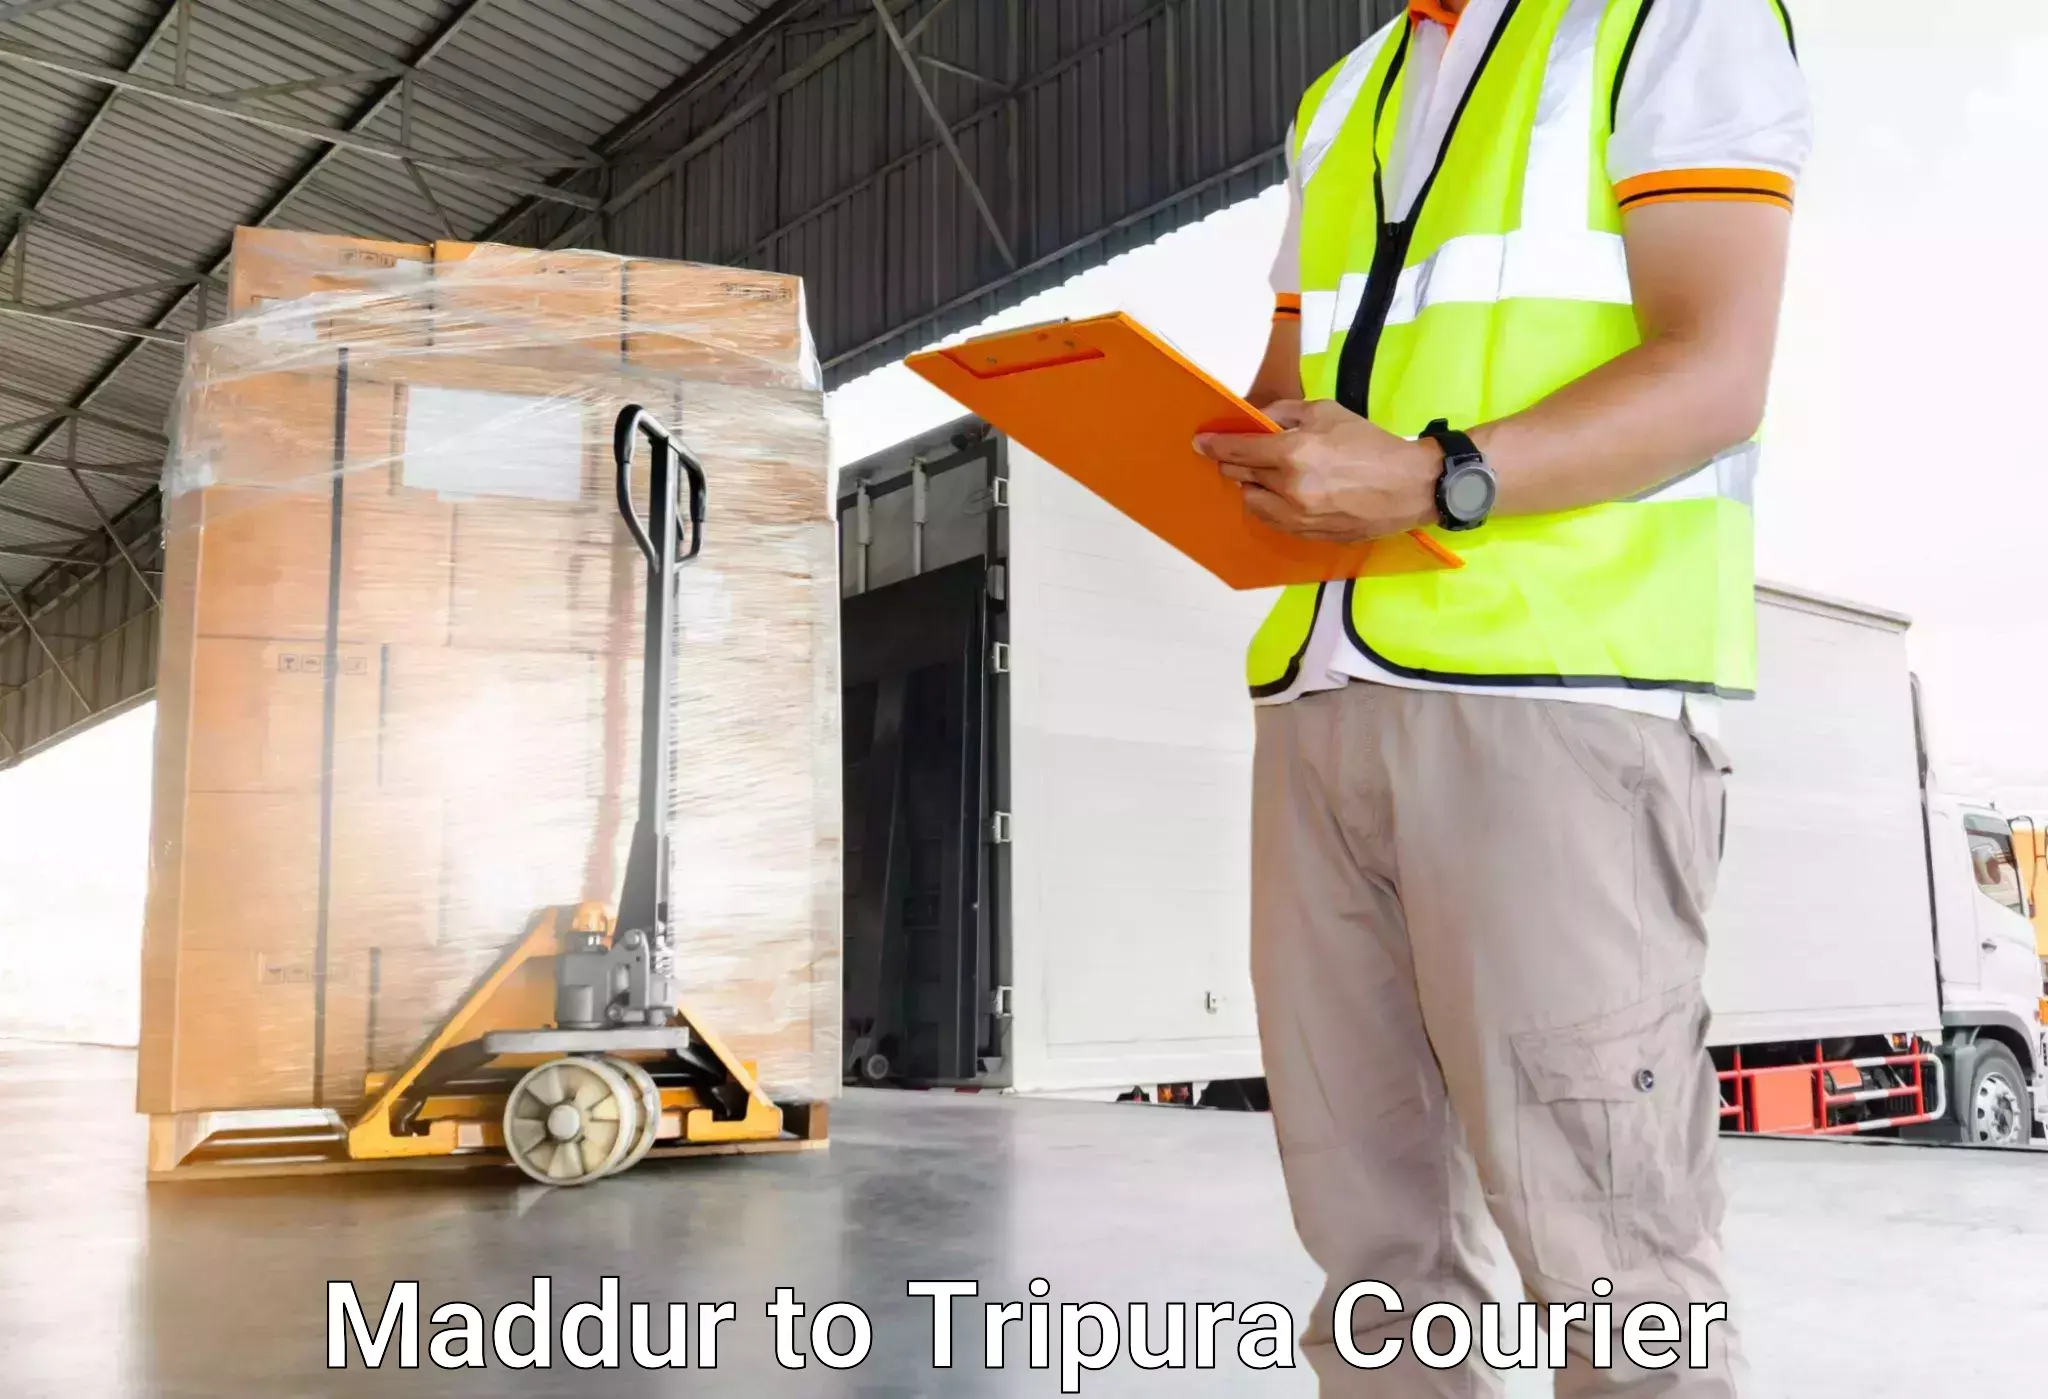 Luggage shipment specialists Maddur to Tripura